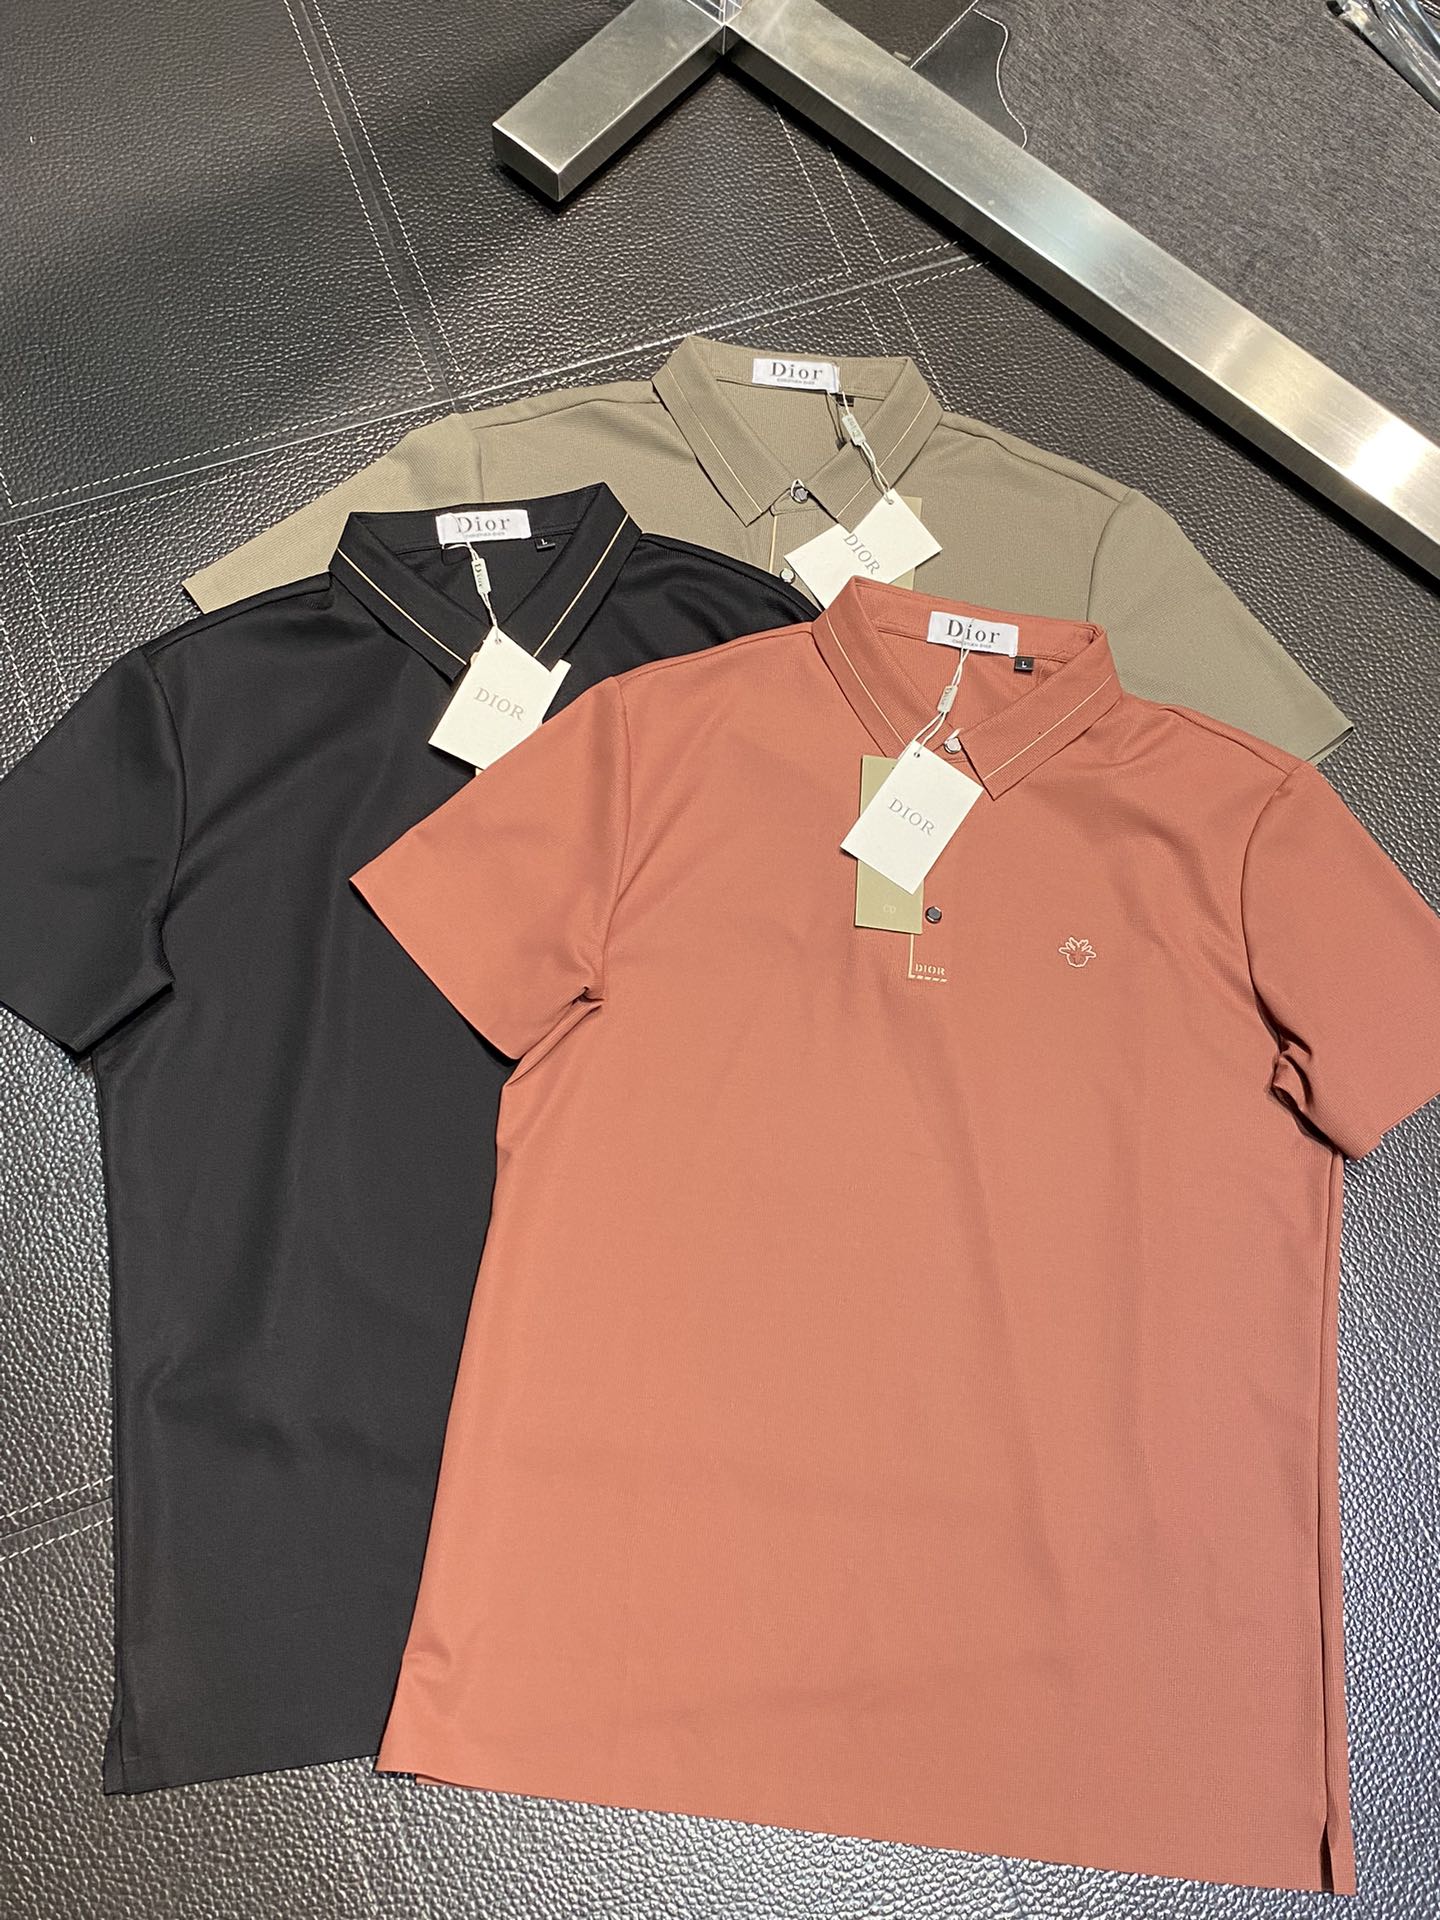 Dior Clothing Polo T-Shirt Men Fashion Short Sleeve